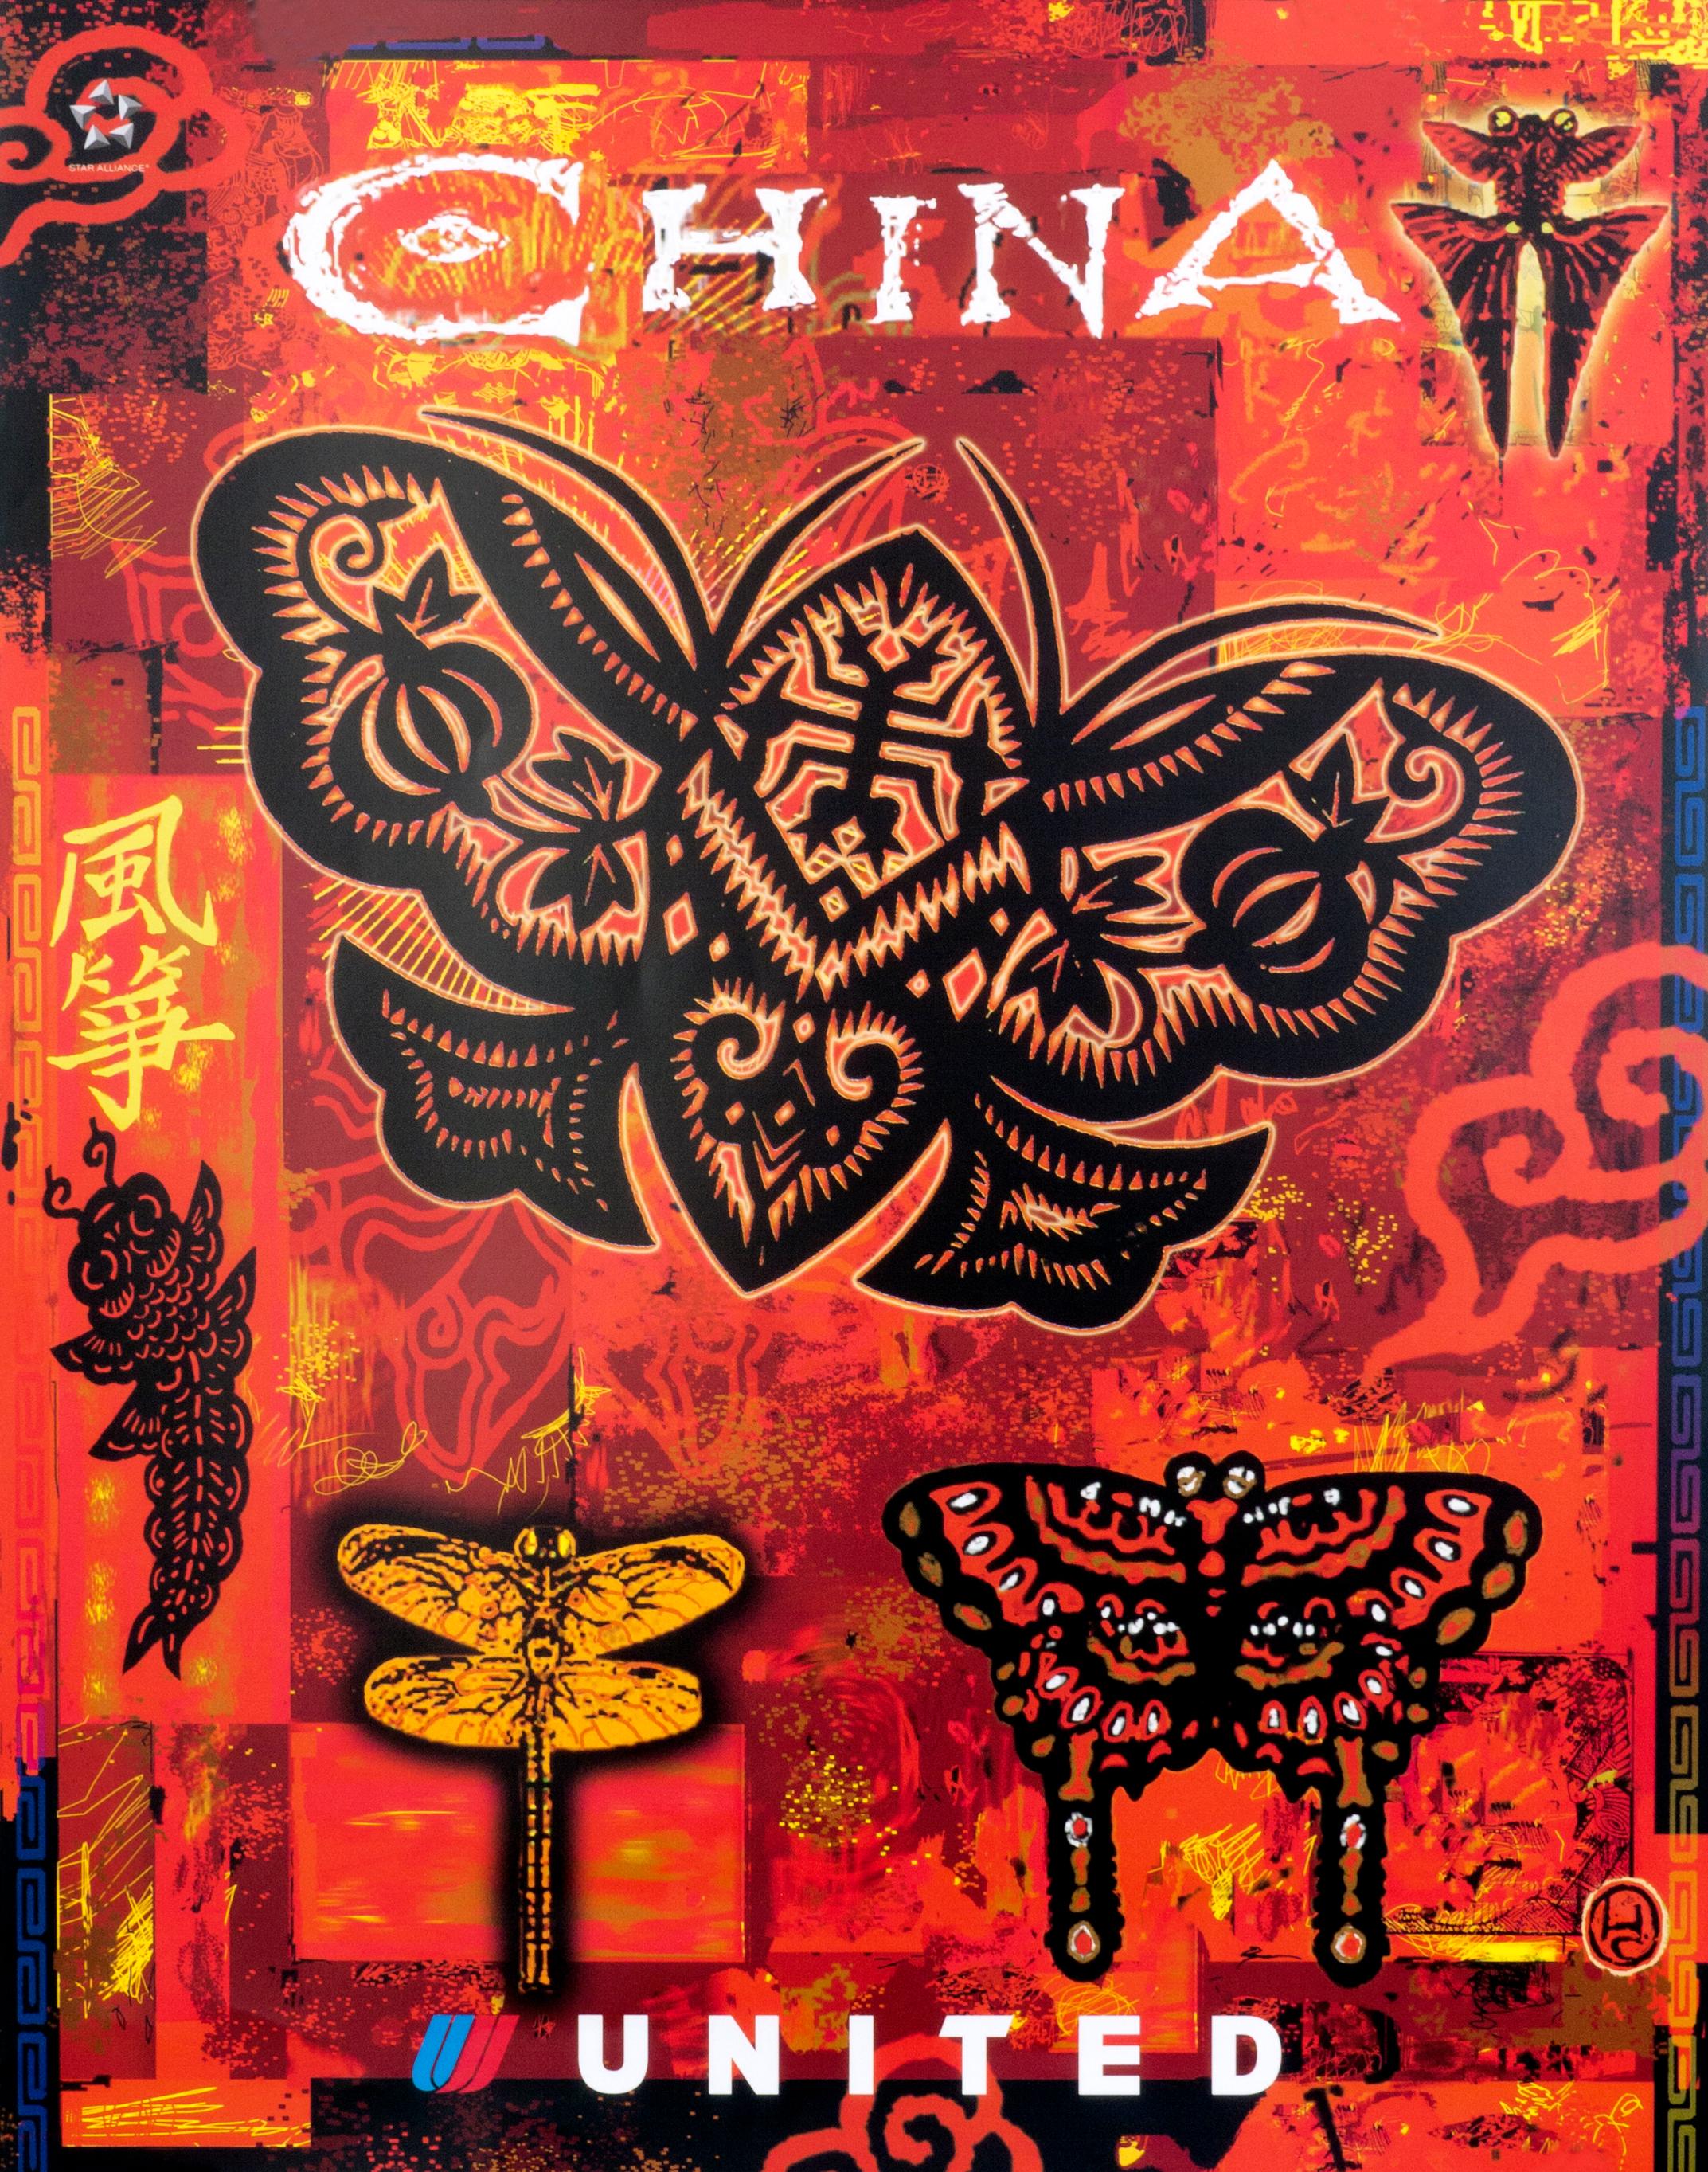 Harvey Chan Animal Print - "China - United Airlines" Original Travel Poster